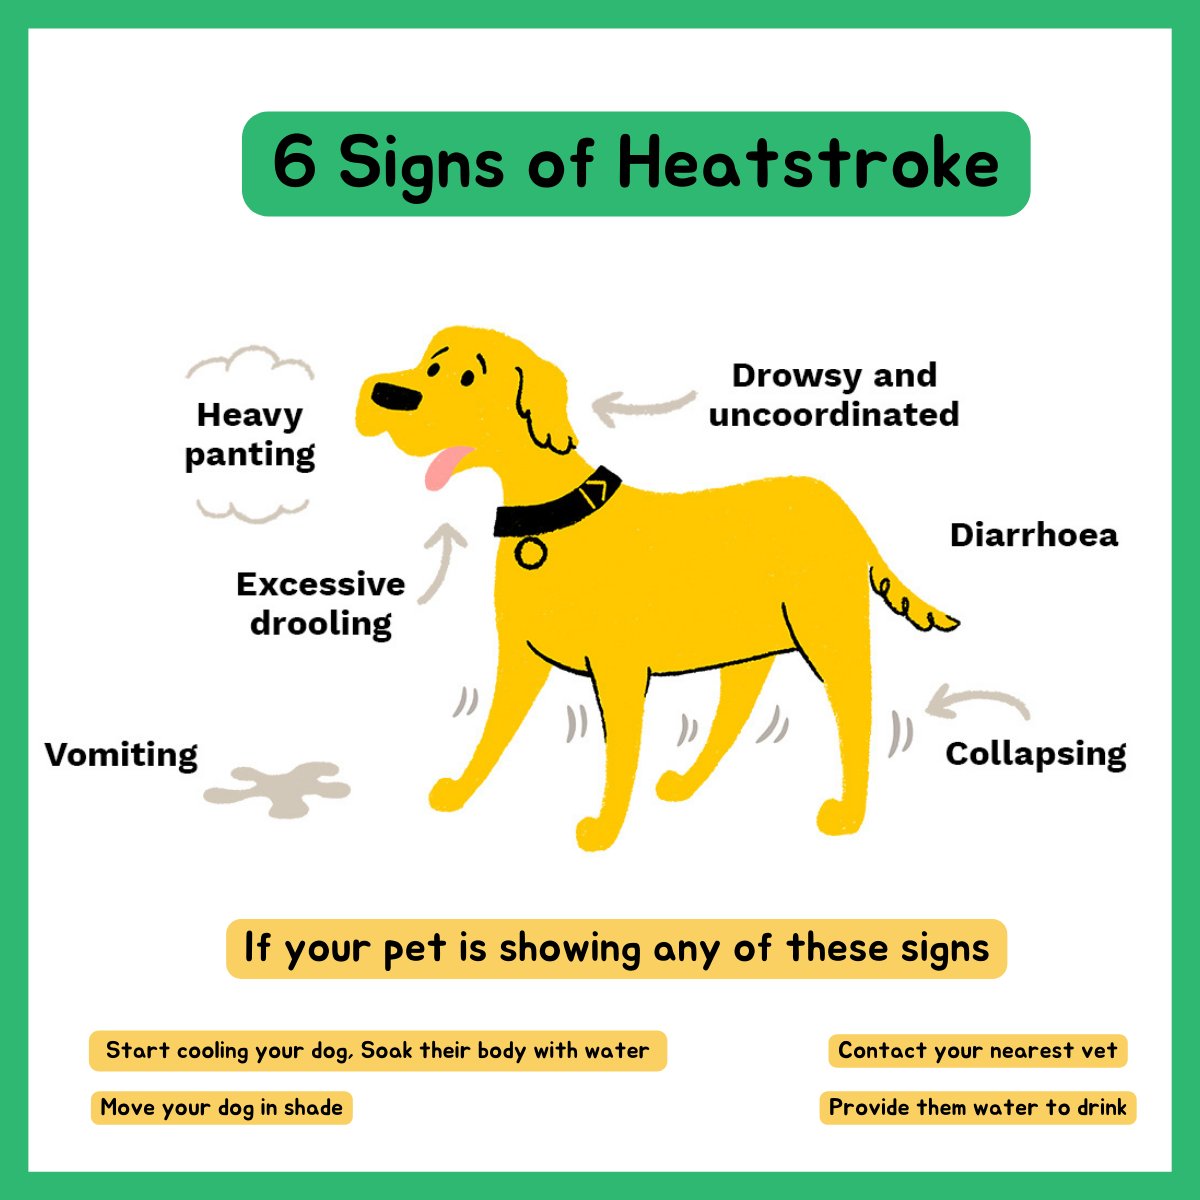 6 signs of Heatstroke
#petscare #peplee #petslife #dogscare #petcaretips #petwellness #cutepets #petservices